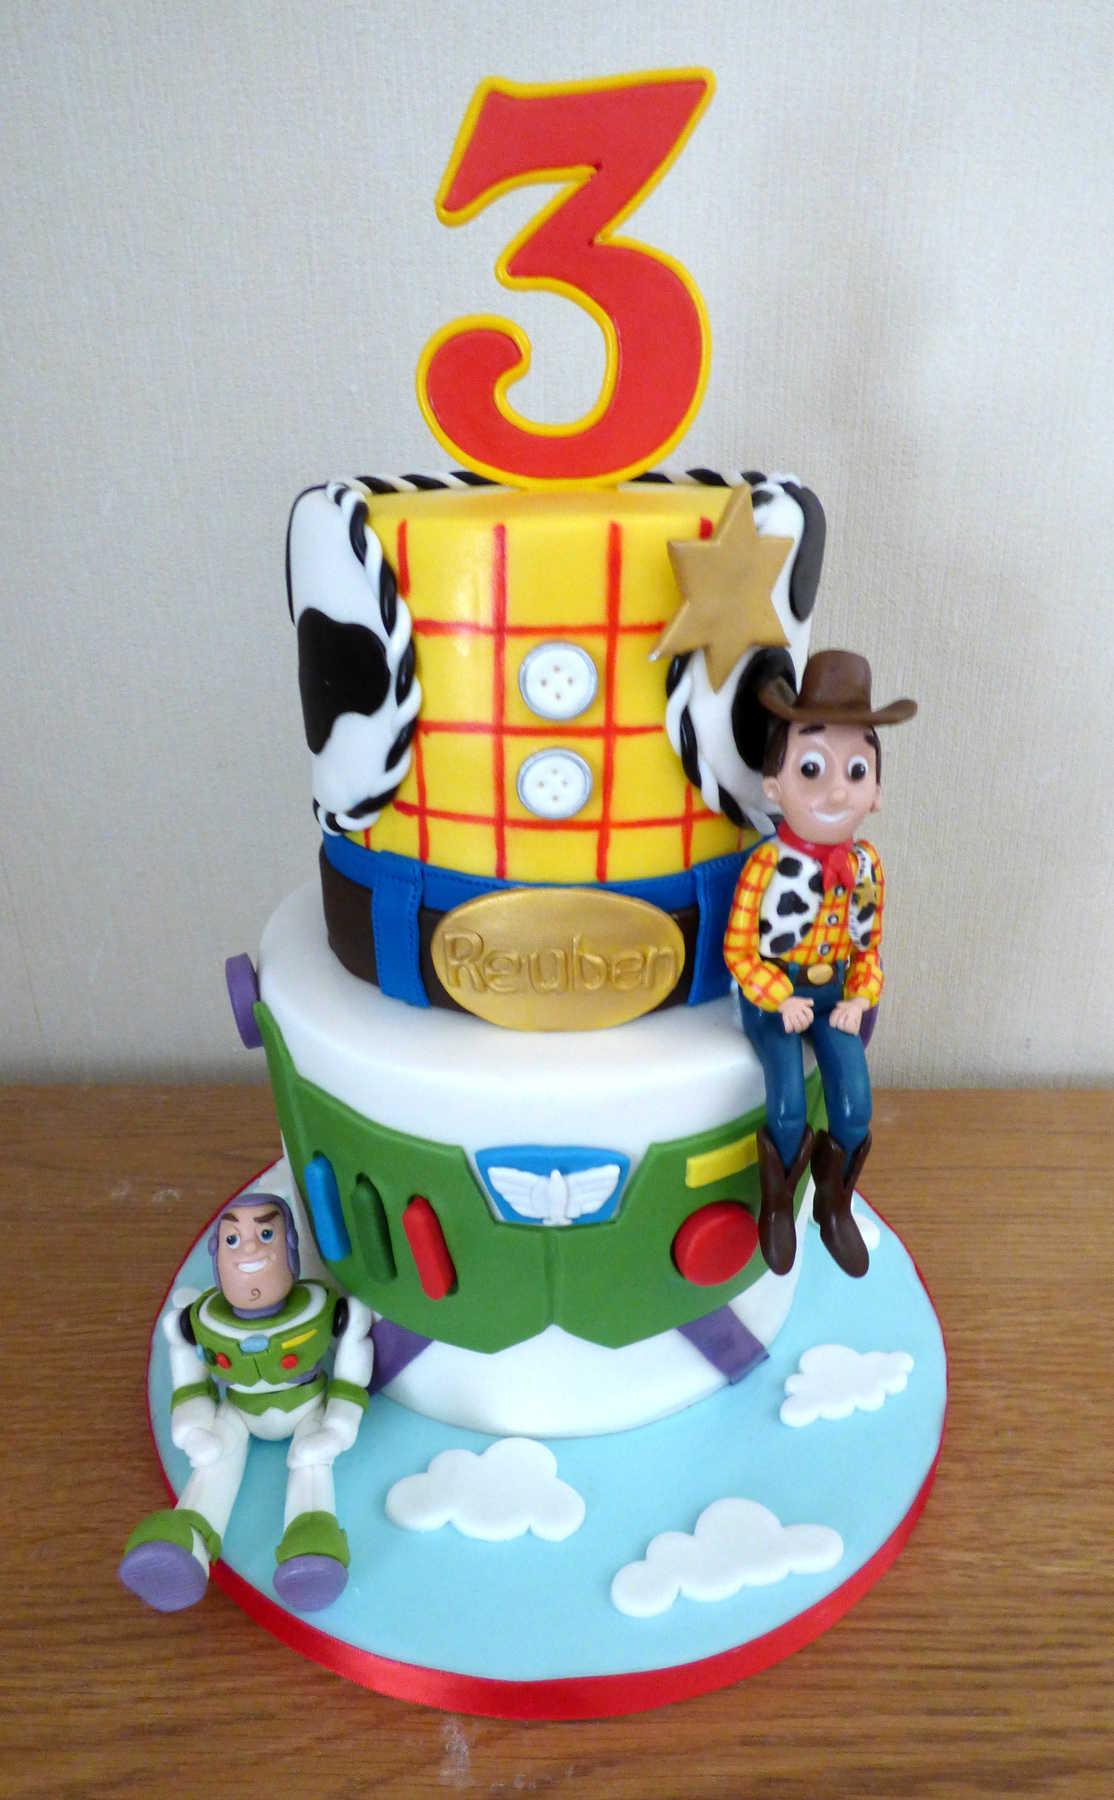 Toy Story Cake Set - Pinkcakes.com